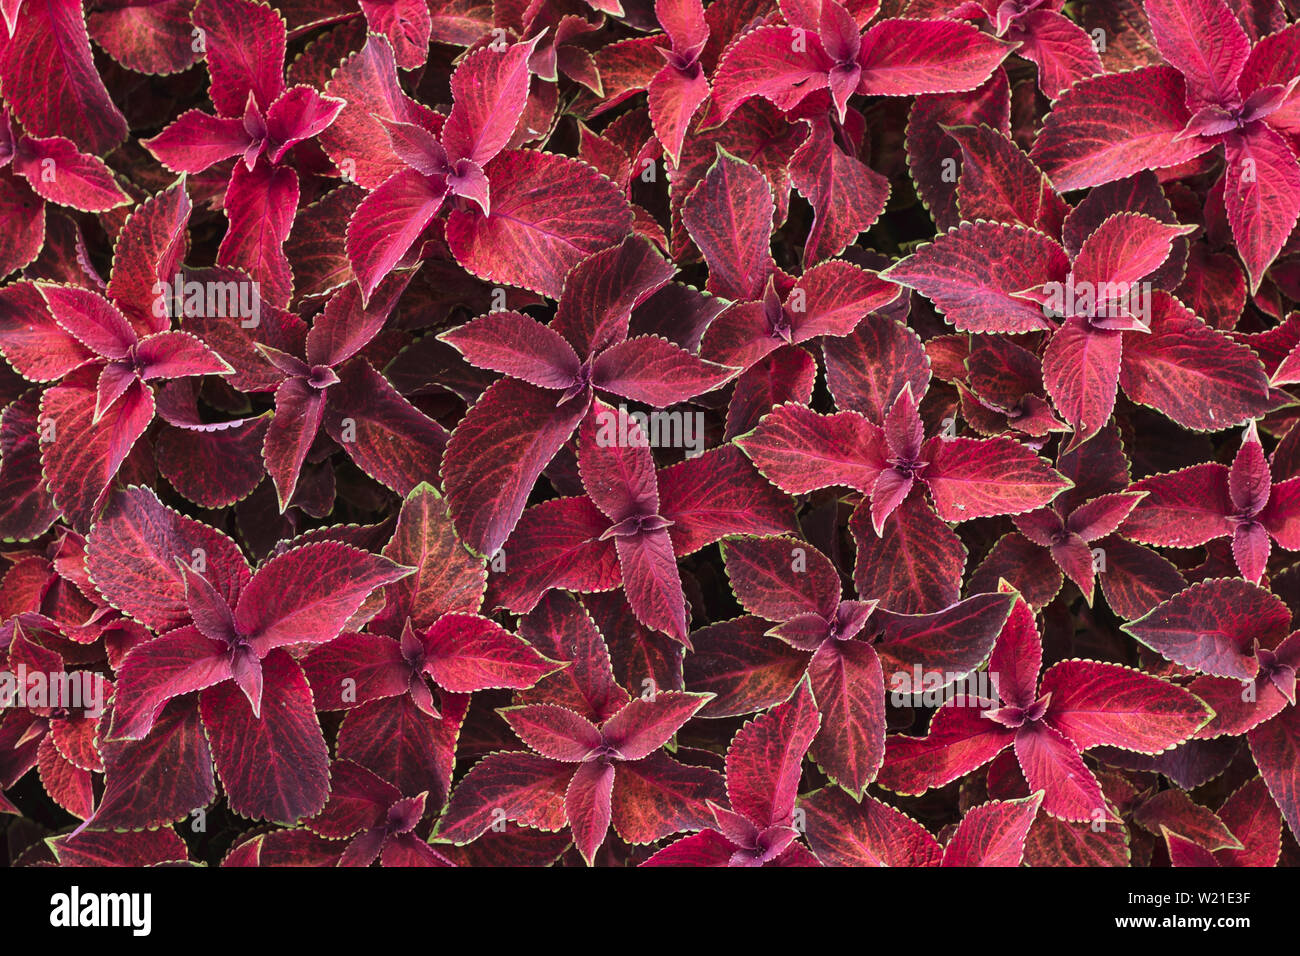 Bright red leaves of perennial plant coleus, plectranthus scutellarioides. Decorative red velvet coleus fairway plants. Background of red leaves. Stock Photo